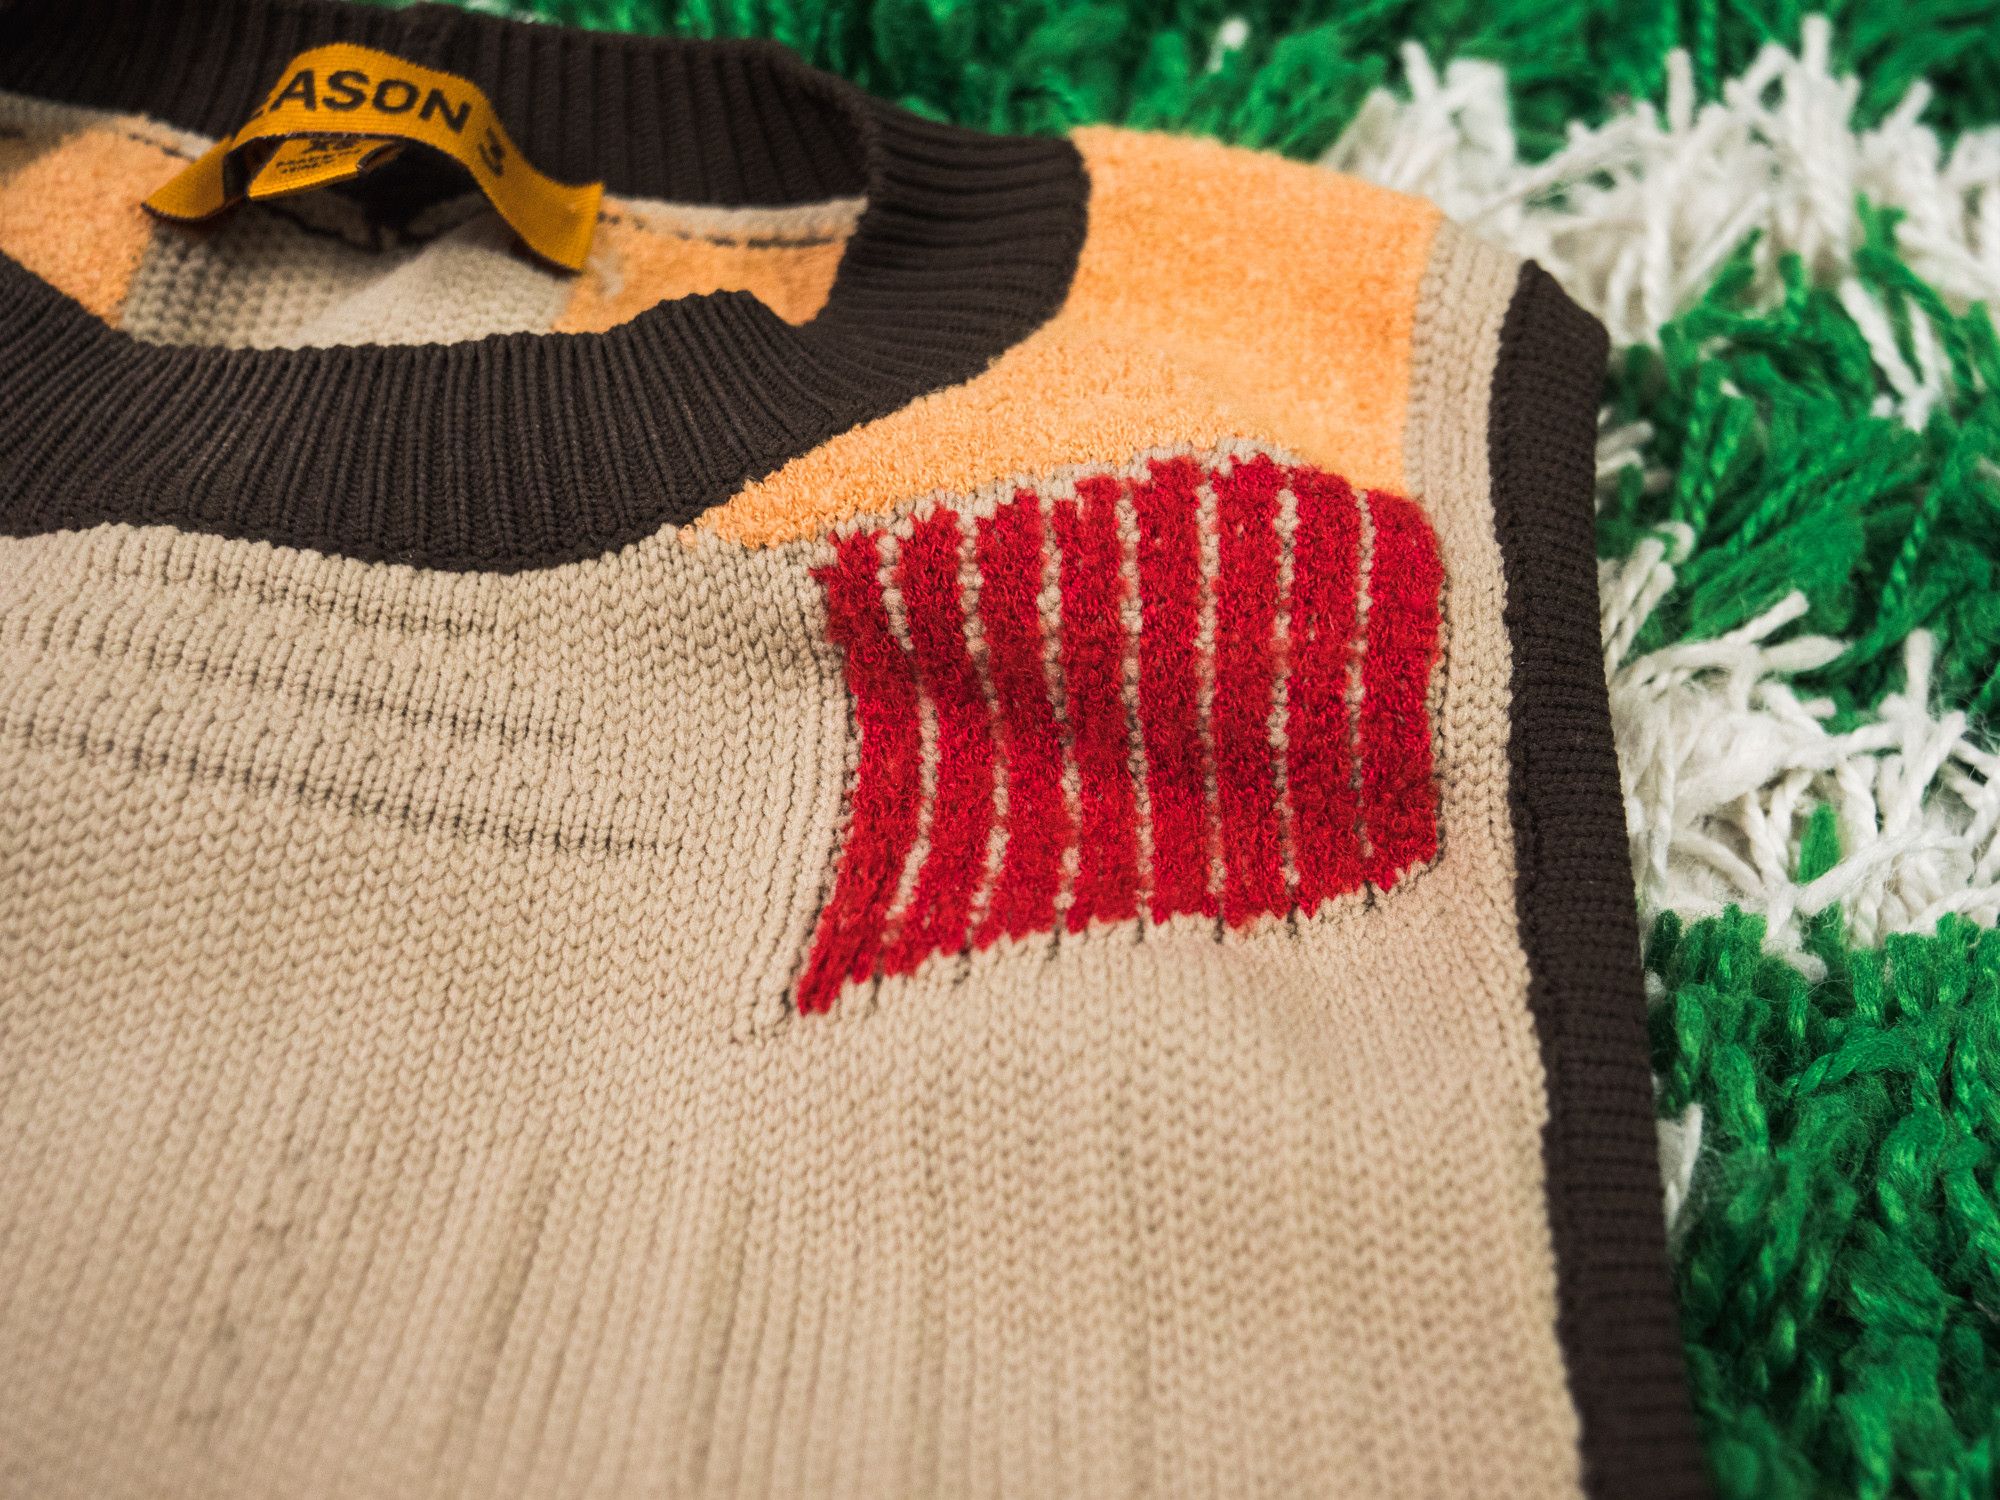 Yeezy Season YEEZY Season 3 - Sock Knit Graphic Crop Top Knitted Size XS / US 0-2 / IT 36-38 - 3 Thumbnail